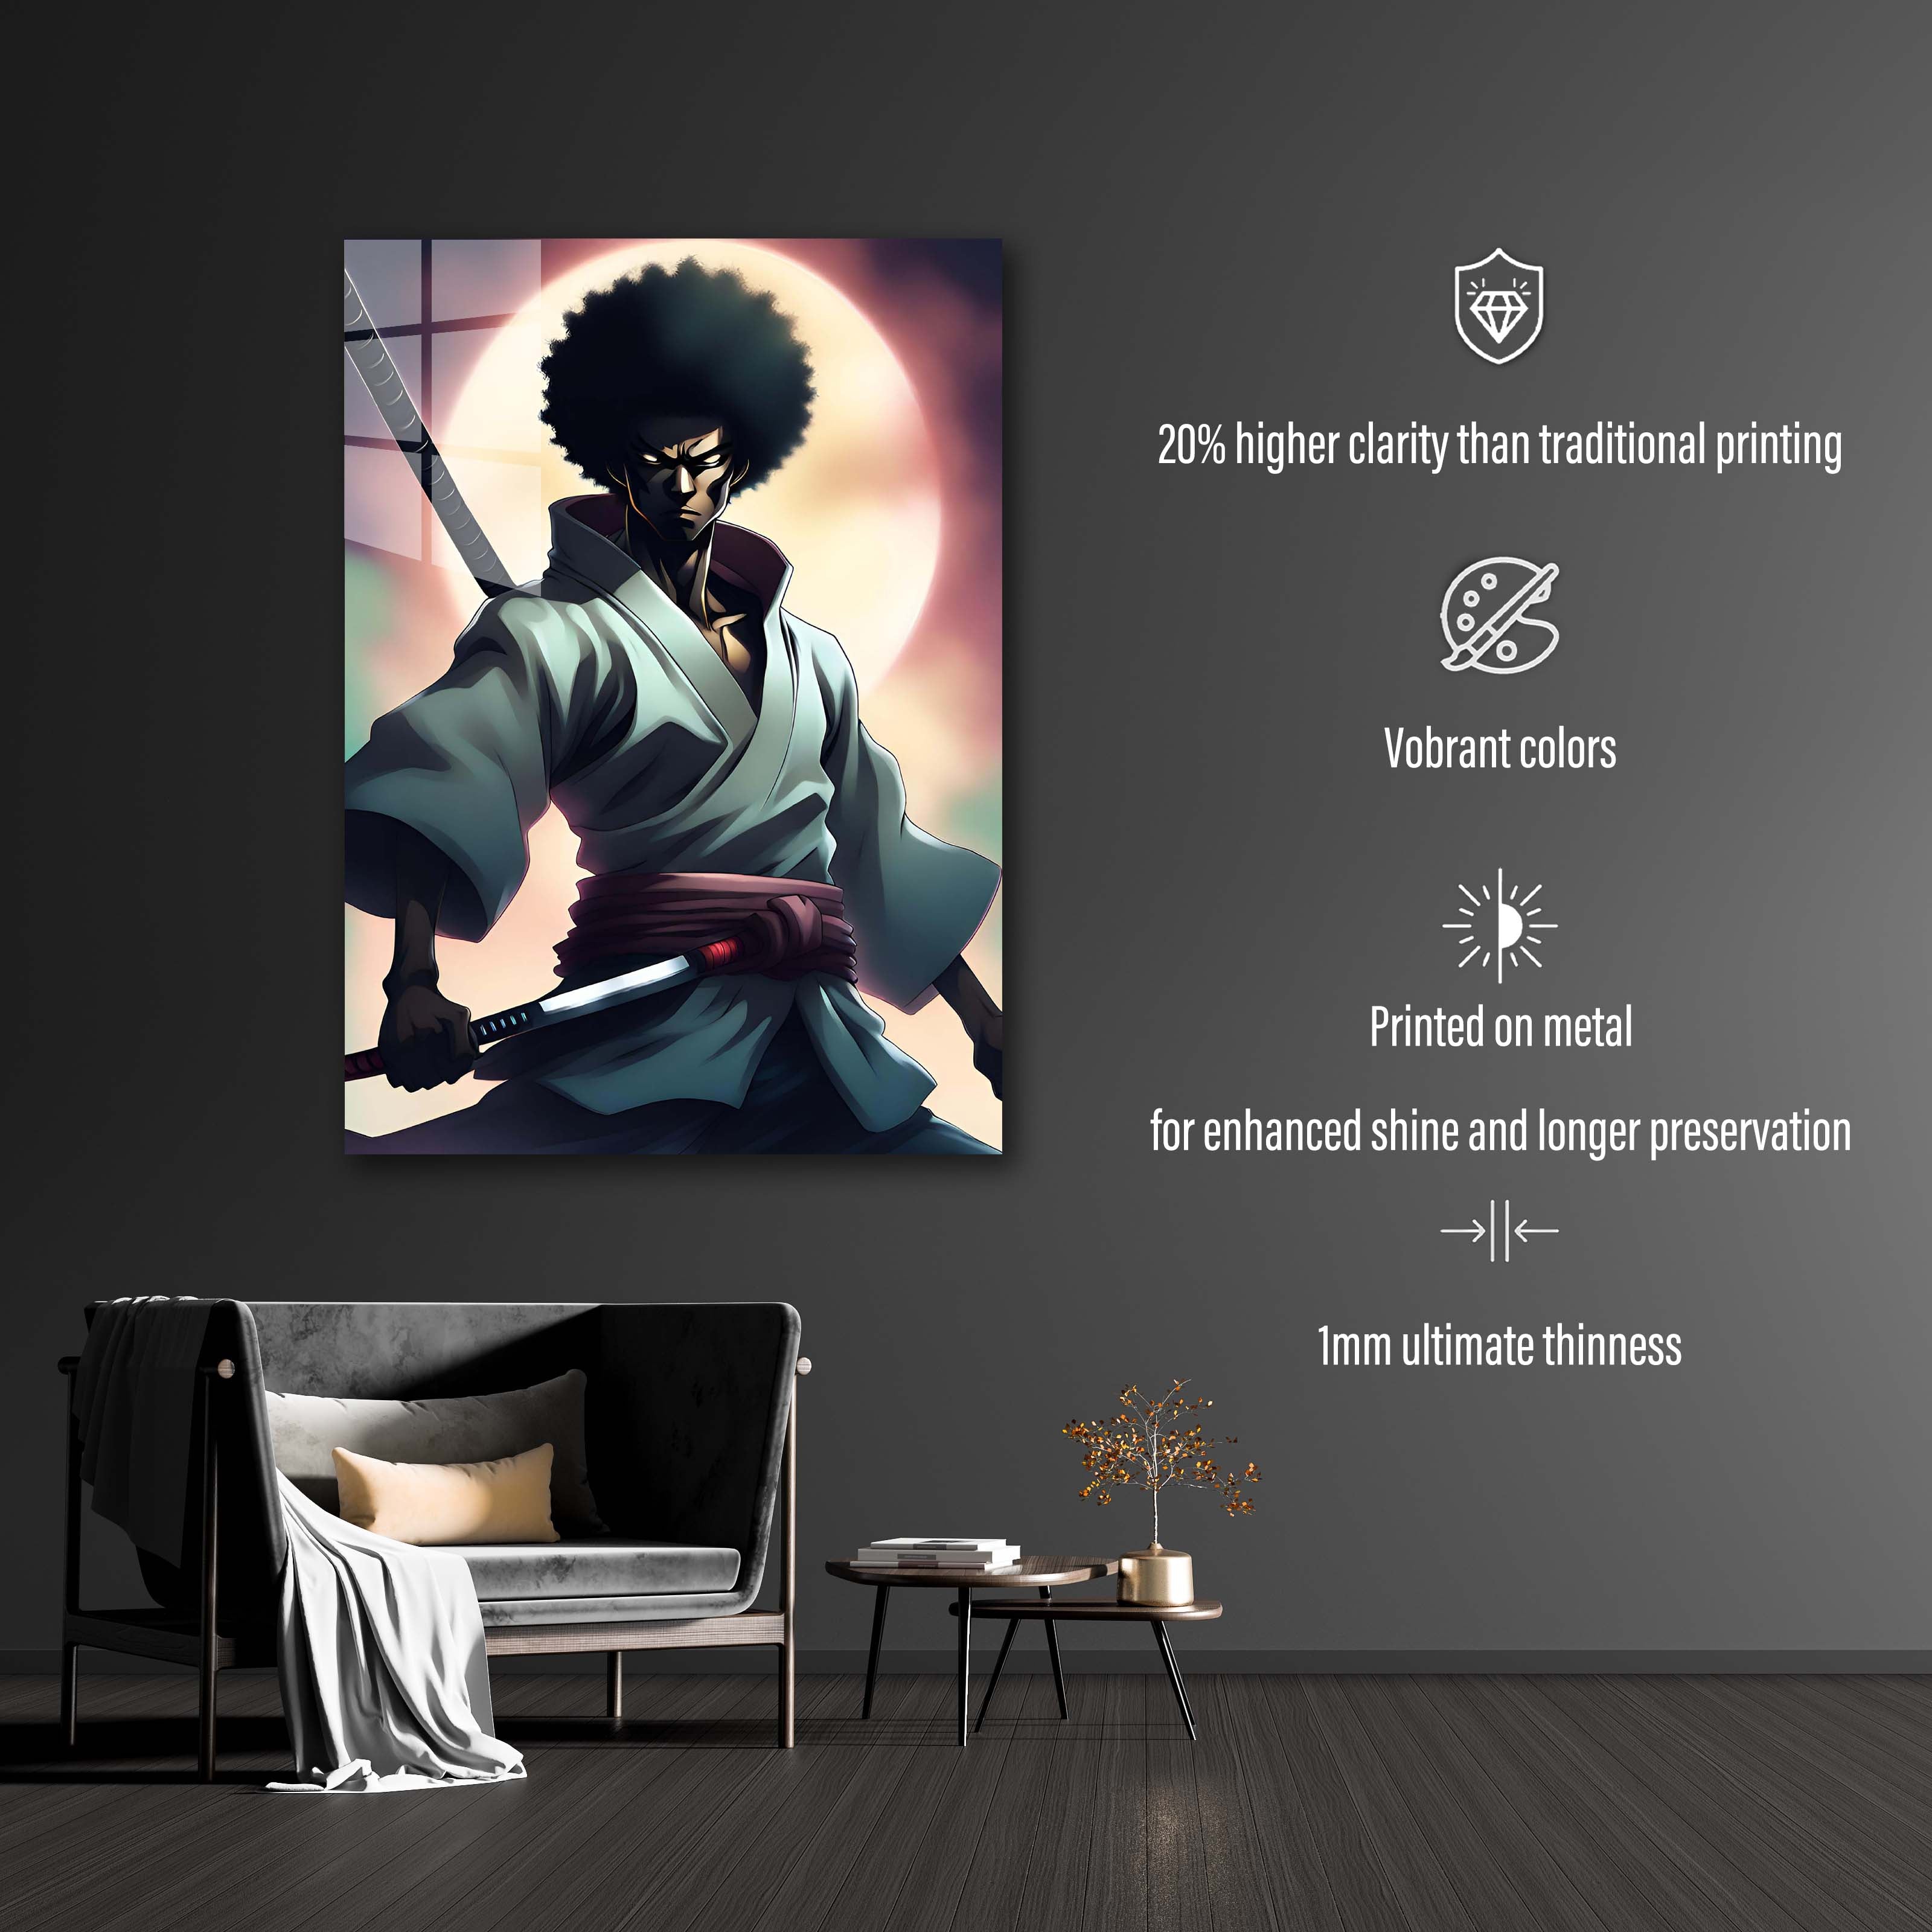 Afro Samurai Art-designed by @DynCreative